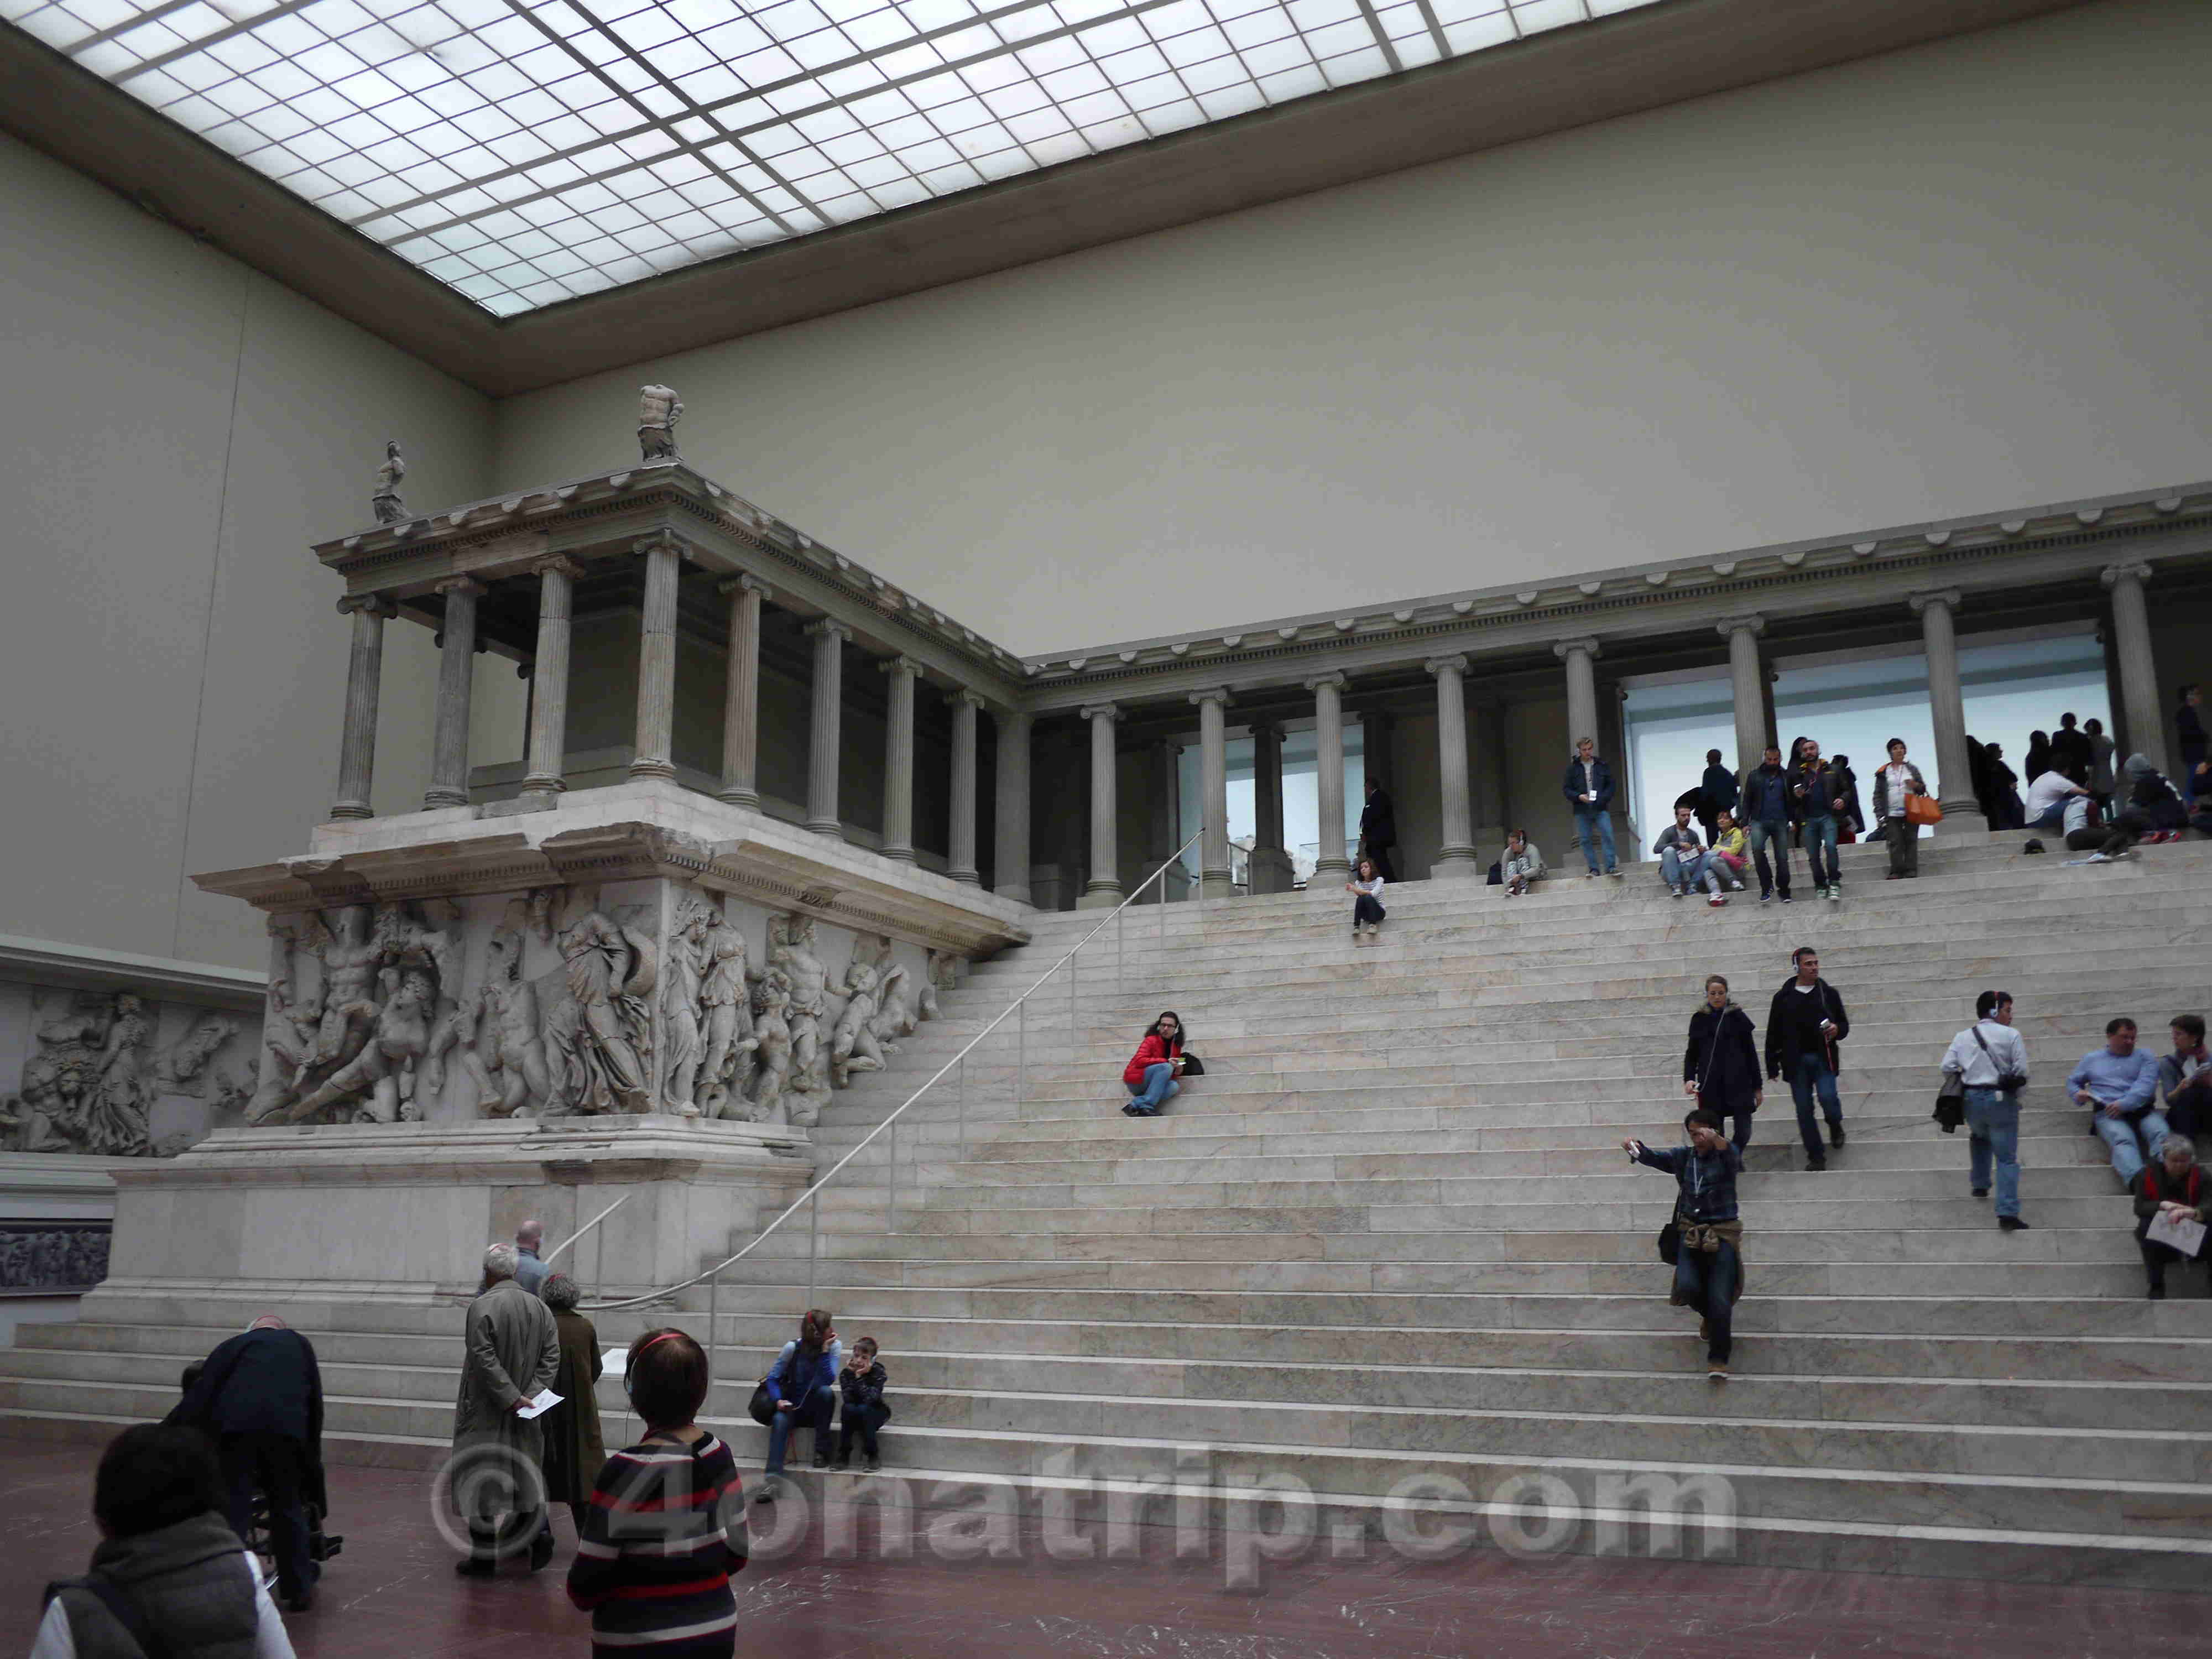 Pergamon Museum Berlin Germany